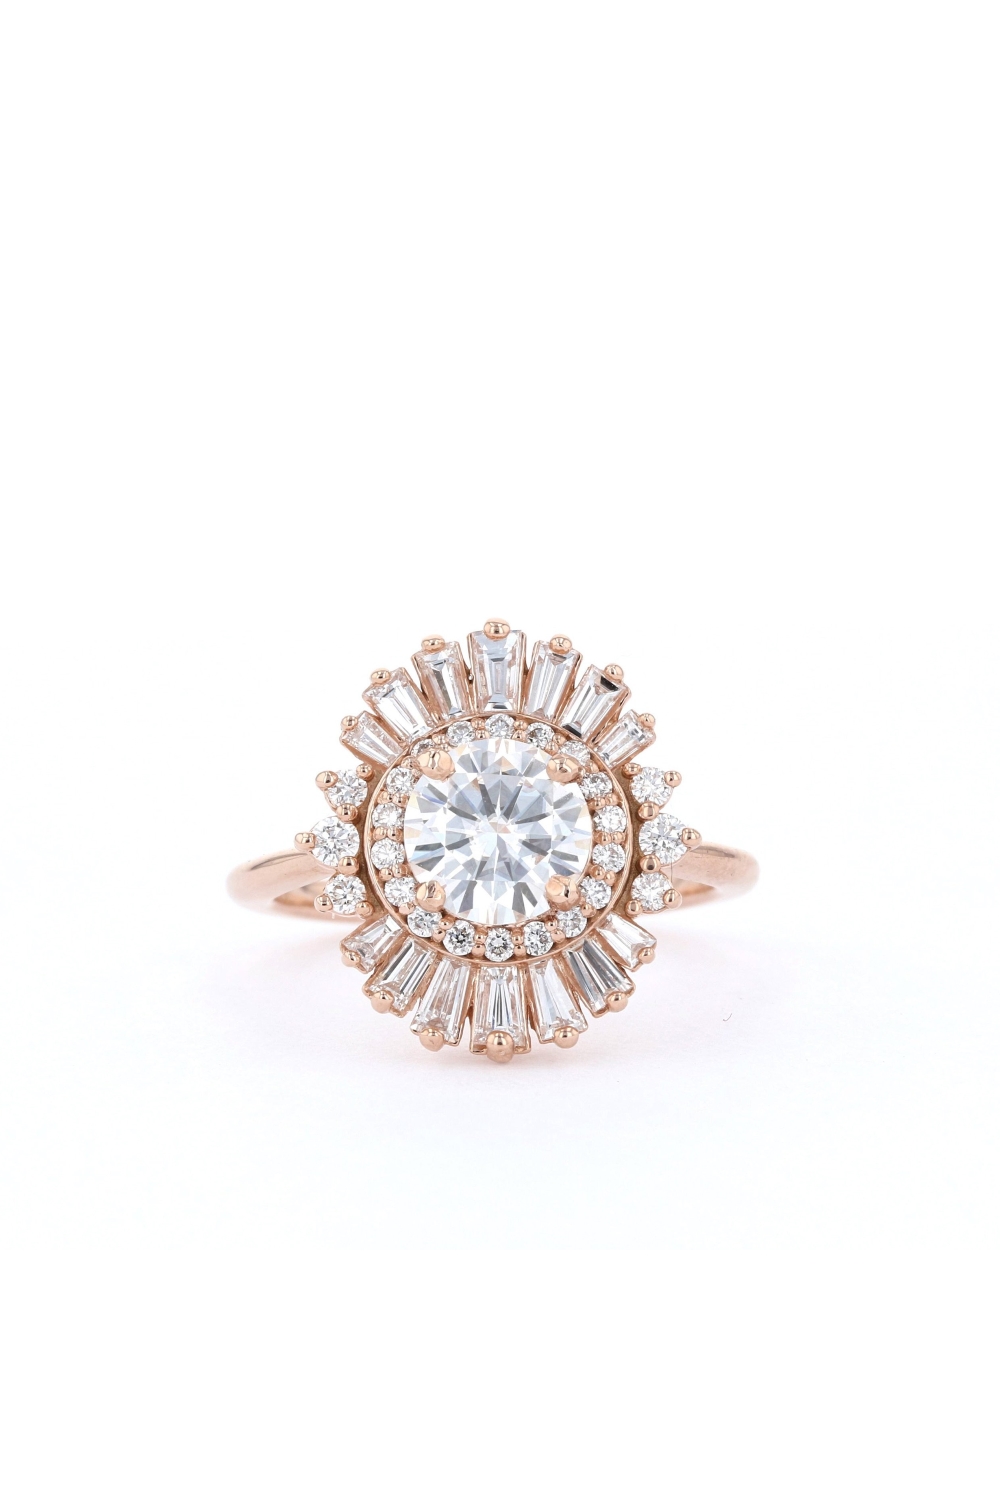 Diamond Halo Engagement Ring - Chic Vintage Brides : Chic Vintage Brides